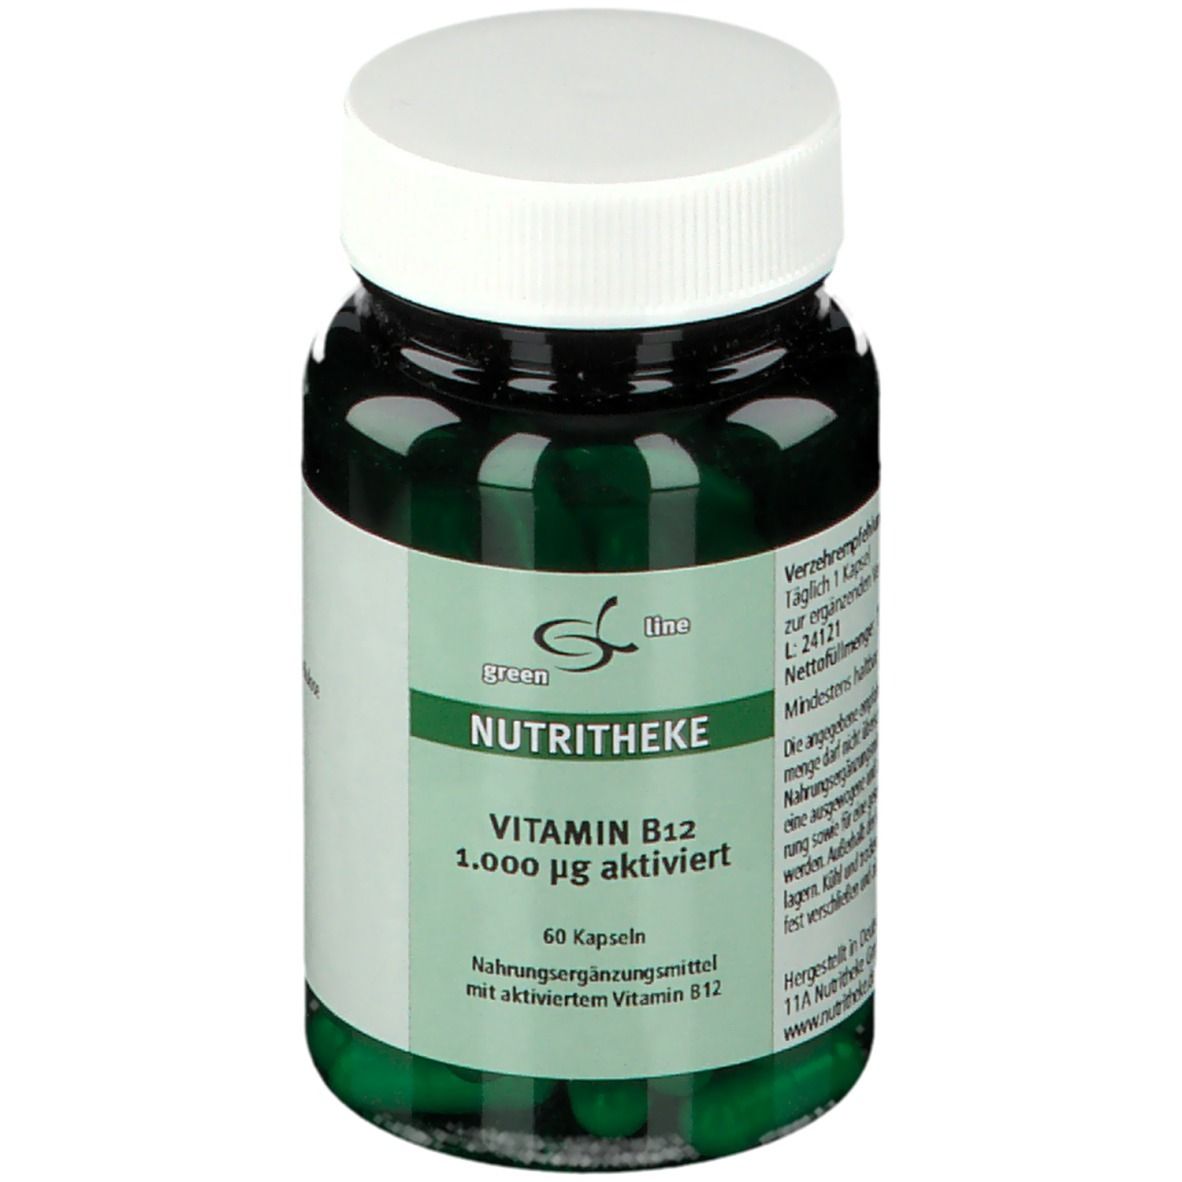 green line Vitamin B12 1.000 μg aktiviert